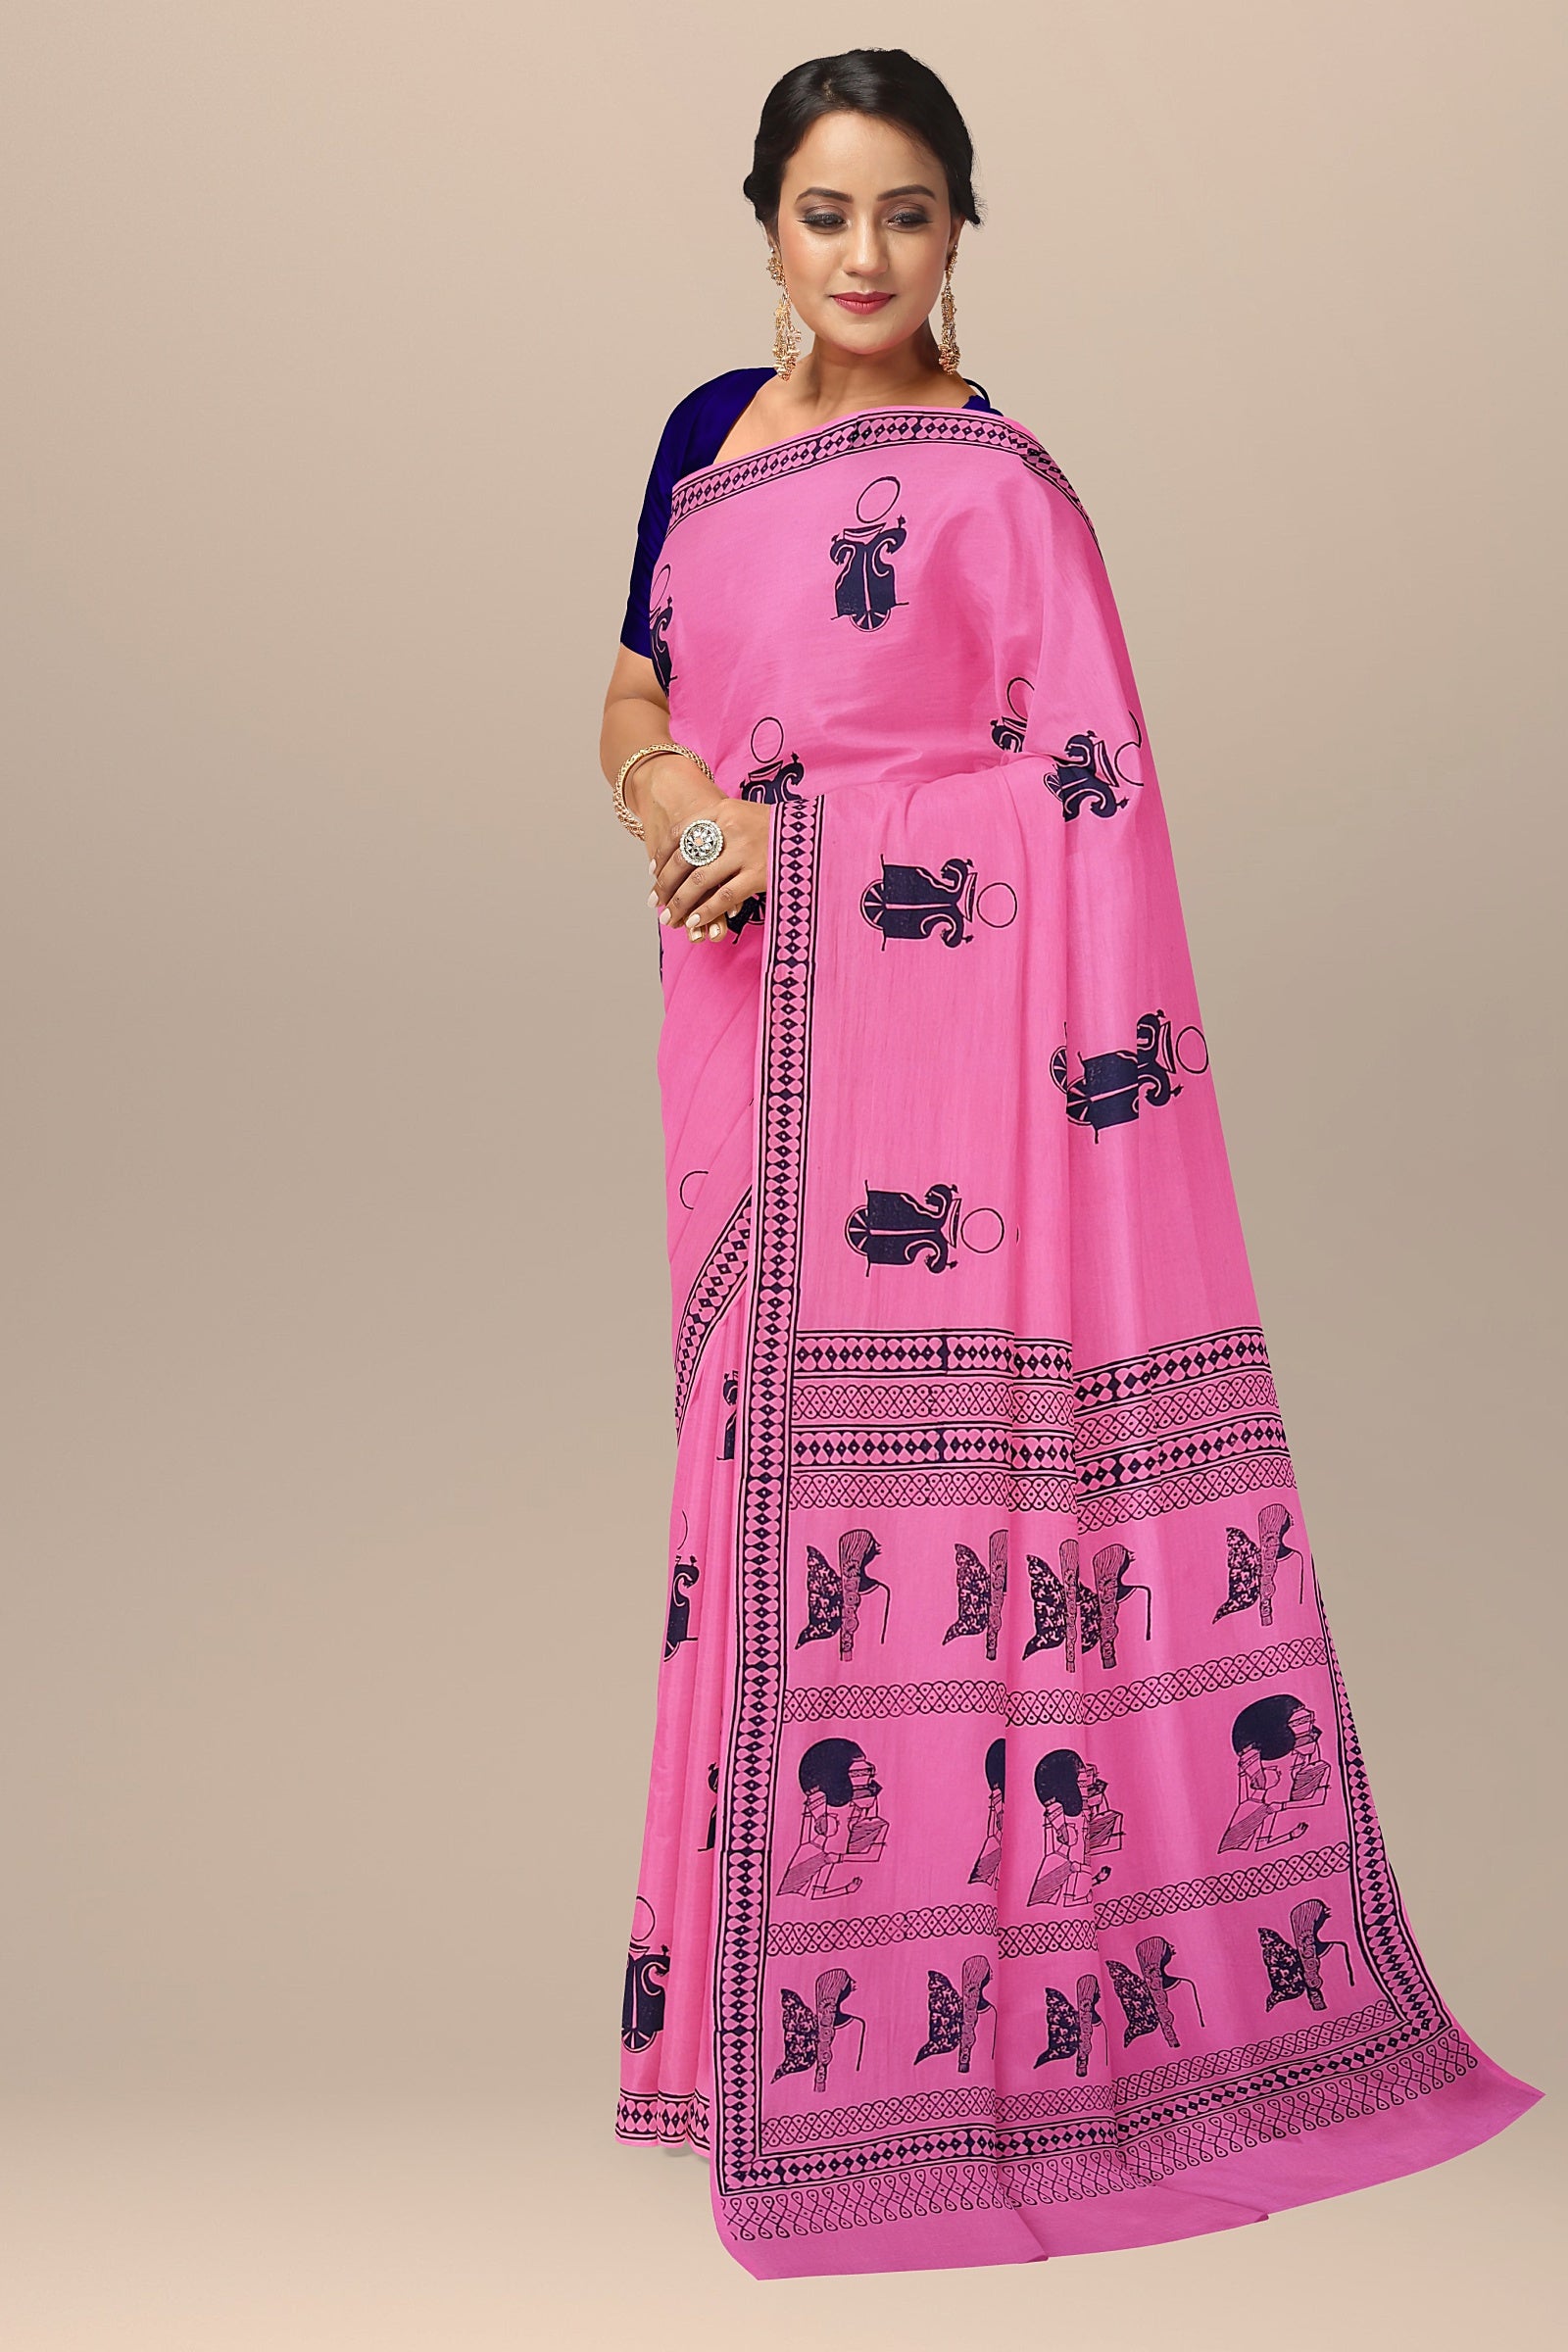 Limited Edition Artist Collection – Chhipa Hand Block Printed Pink Malmal Cotton Saree with Anupriya’s Painting Motif SKU-7011 - Bhartiya Shilp